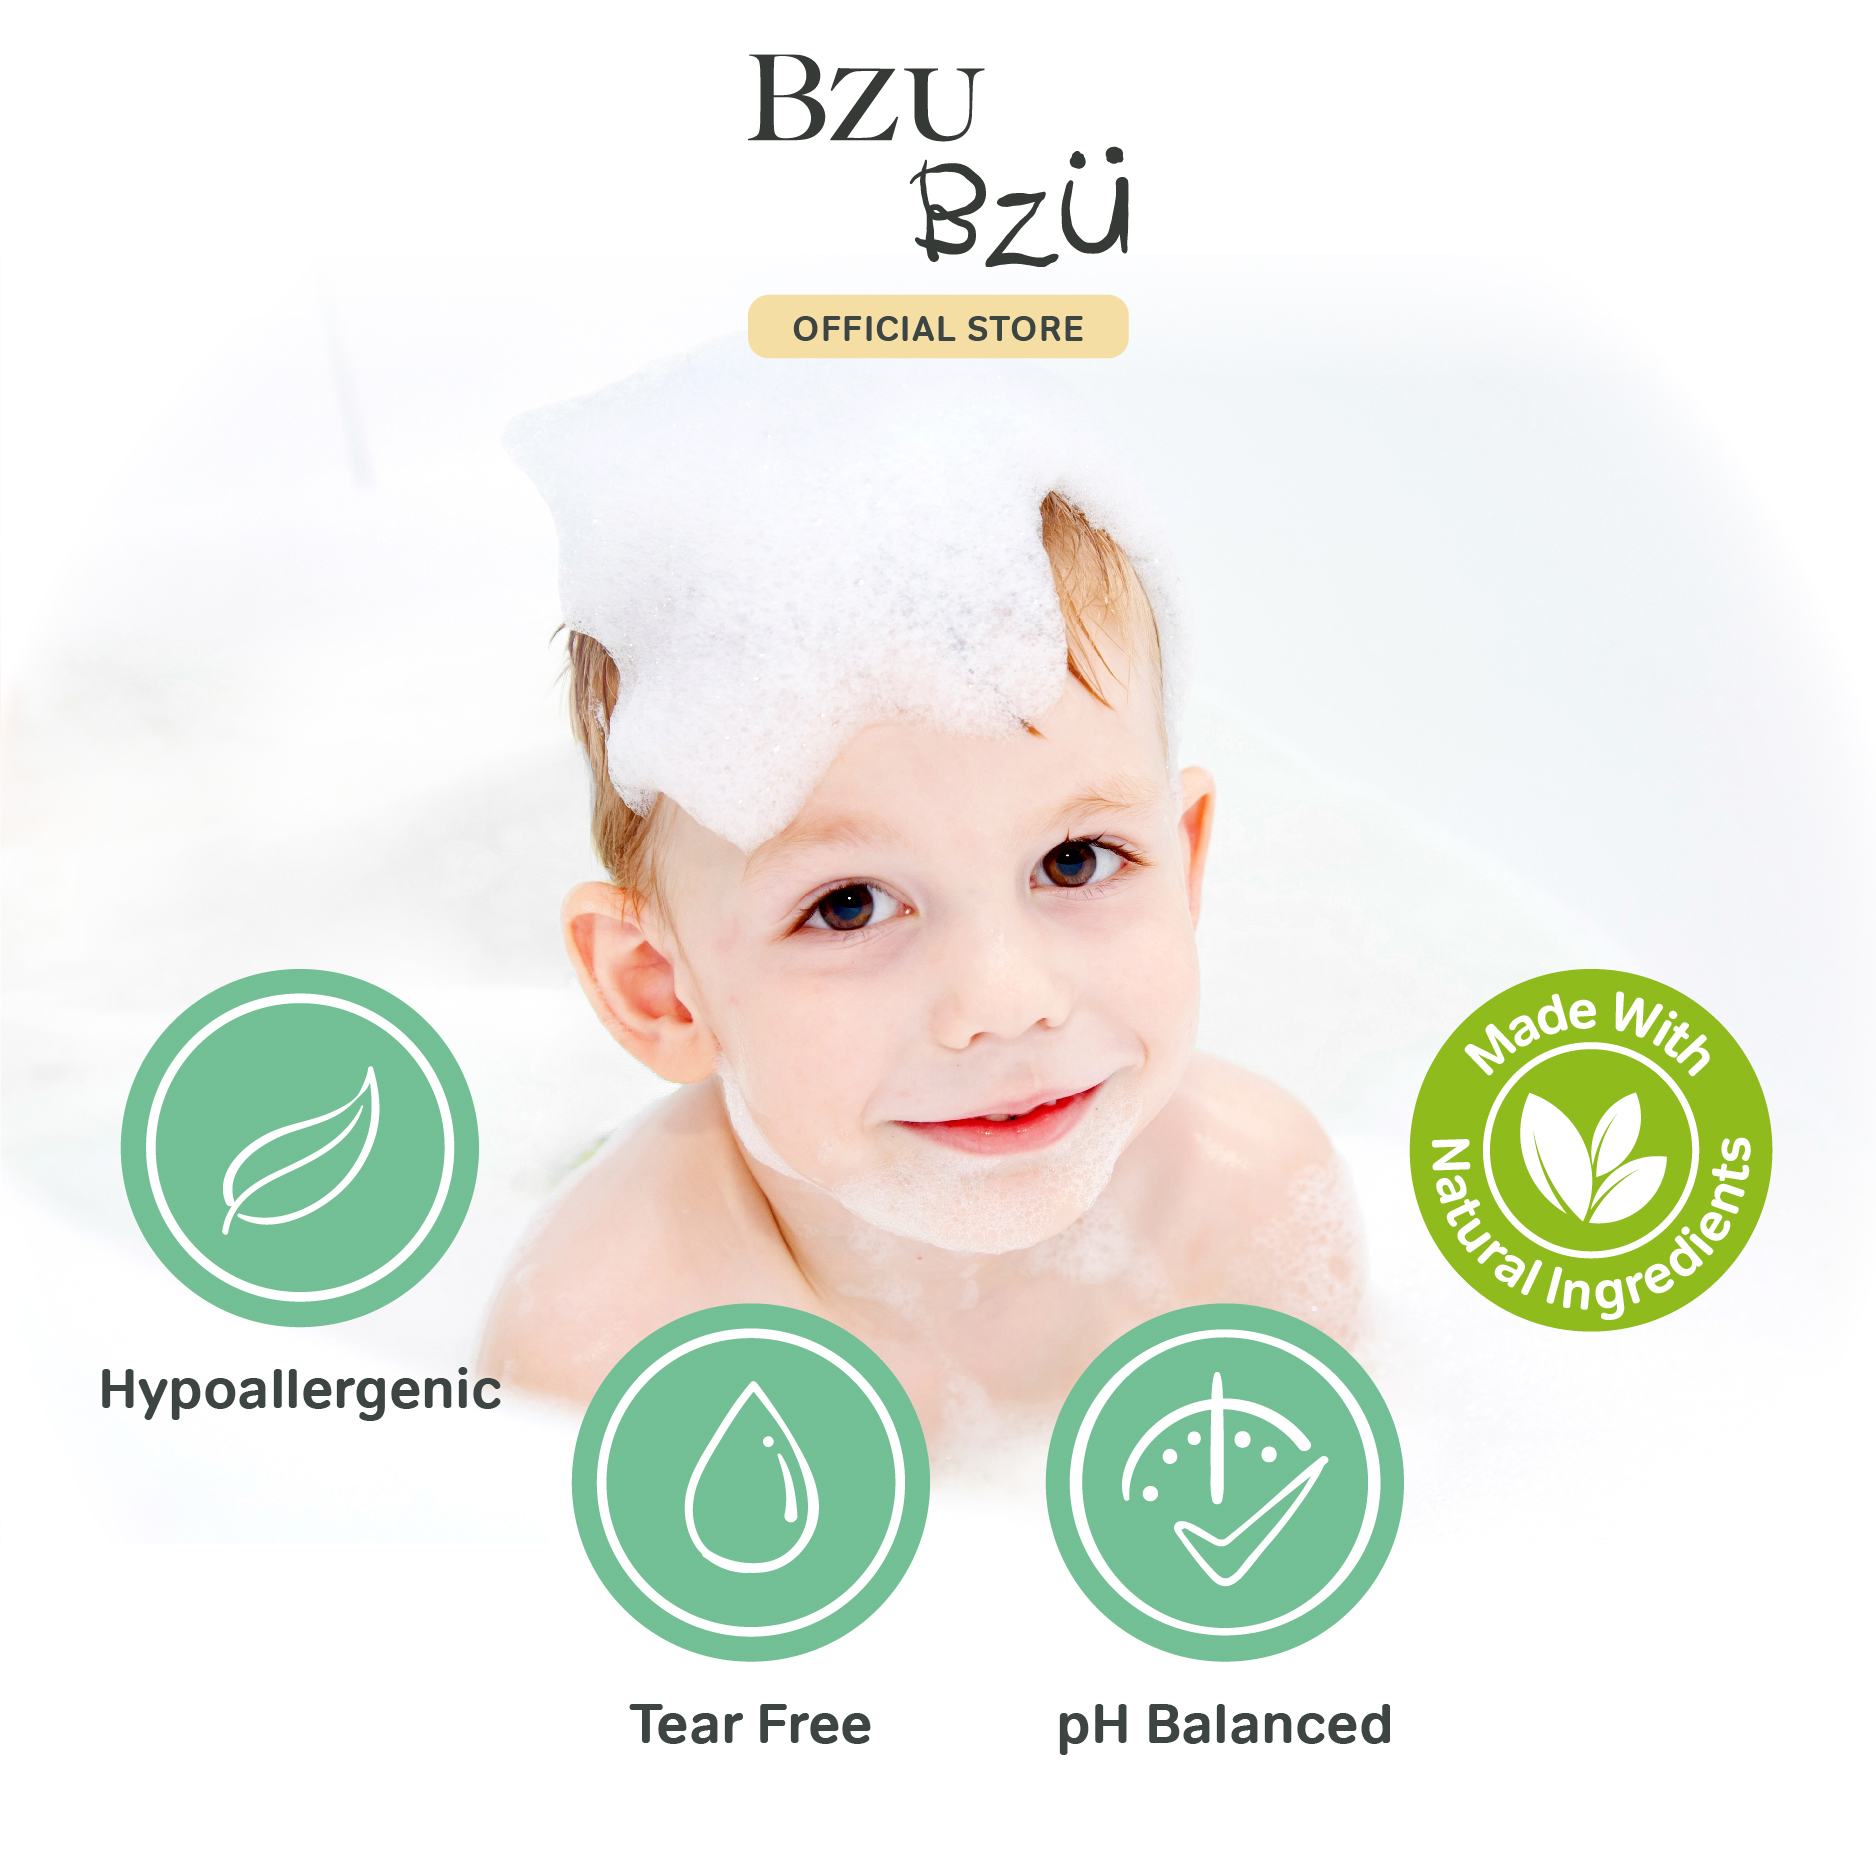 Bzu Bzu Fresh Cooling Kids Shampoo 600ml